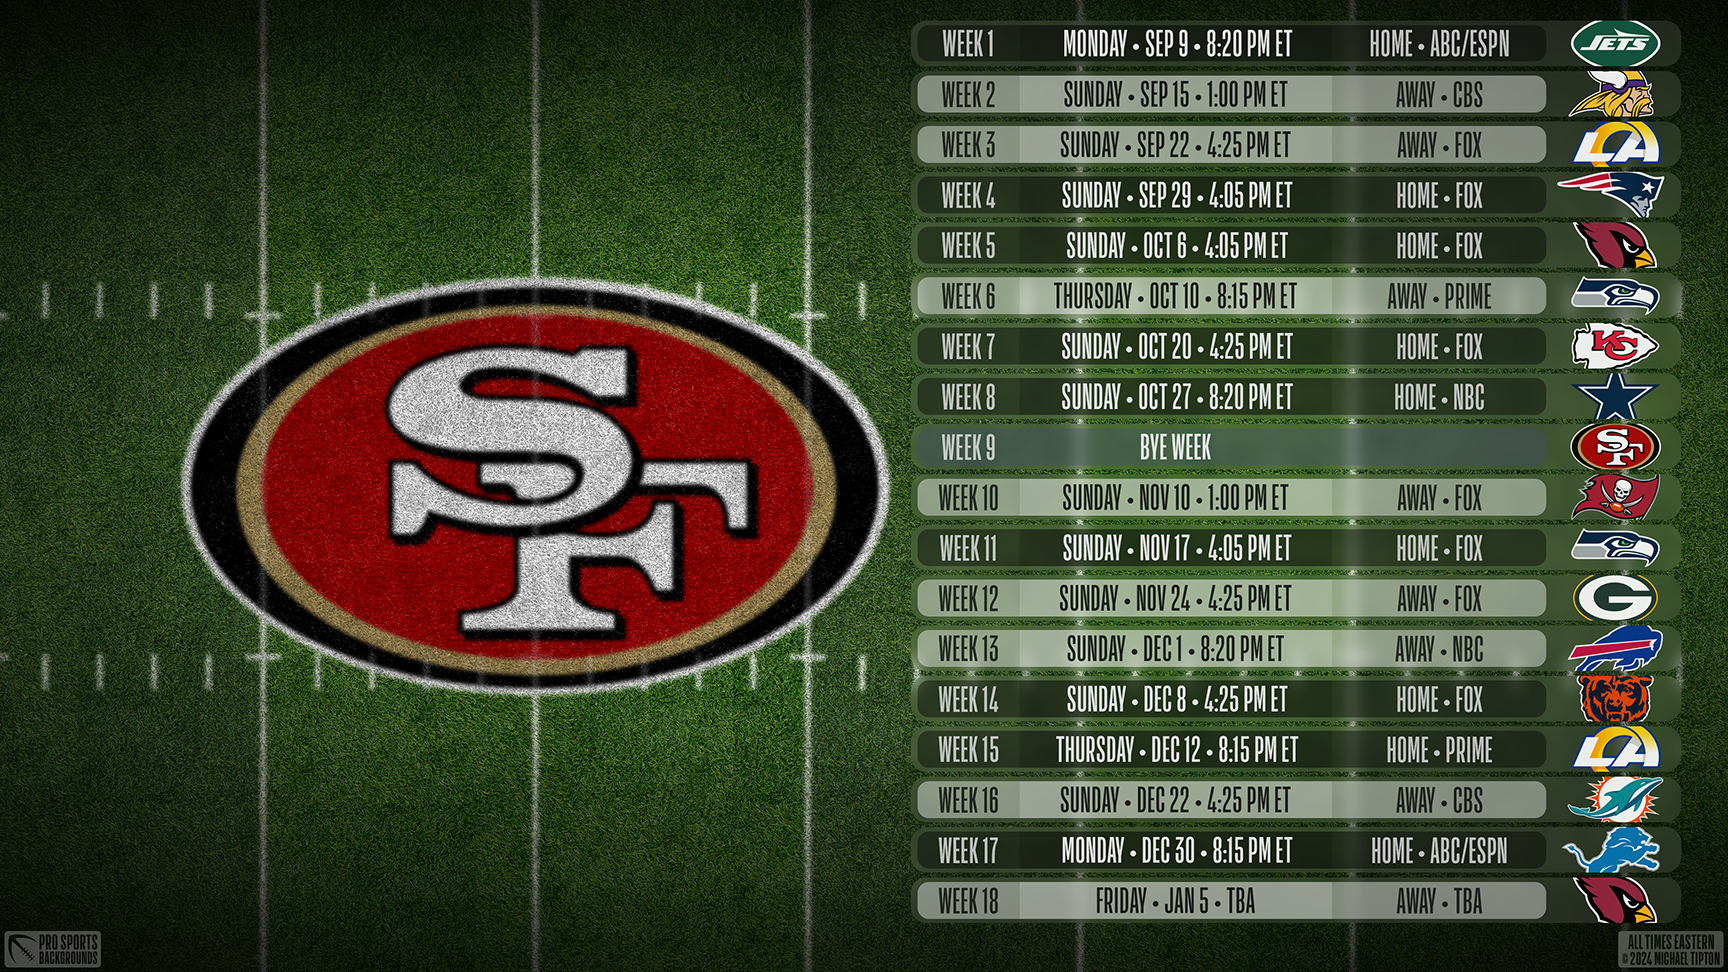 San Francisco 49ers wallpaper schedule desktop ET NFL placeholder thumb